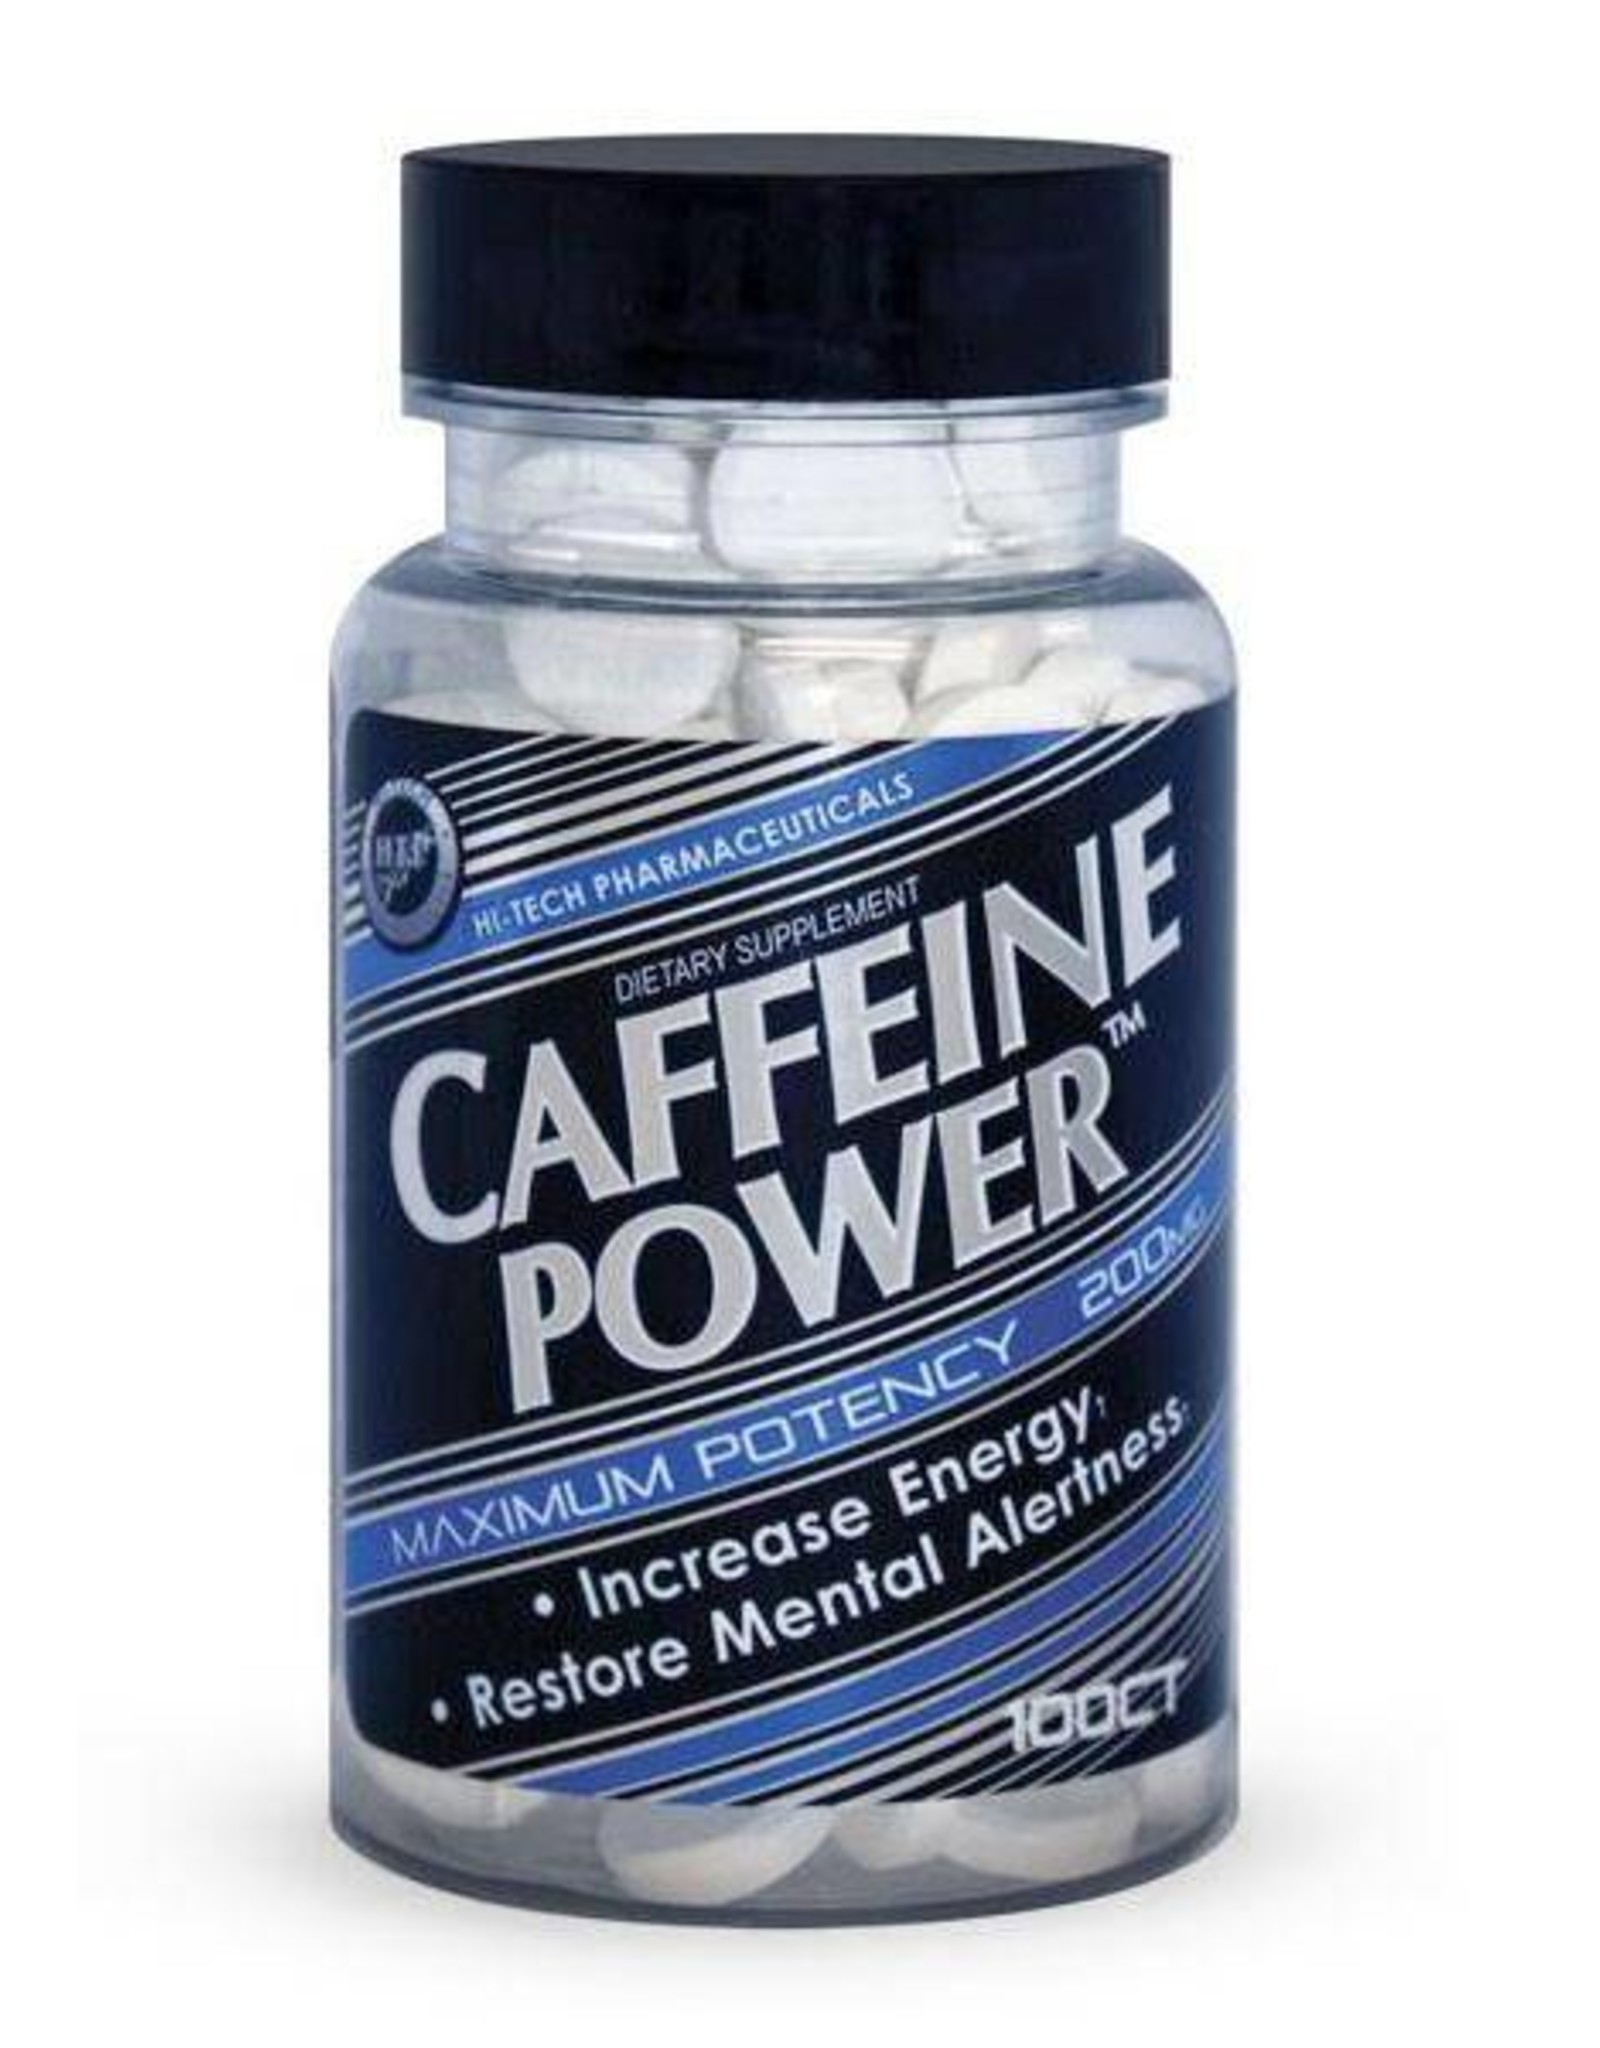 HiTech Pharma Caffeine Power 200MG